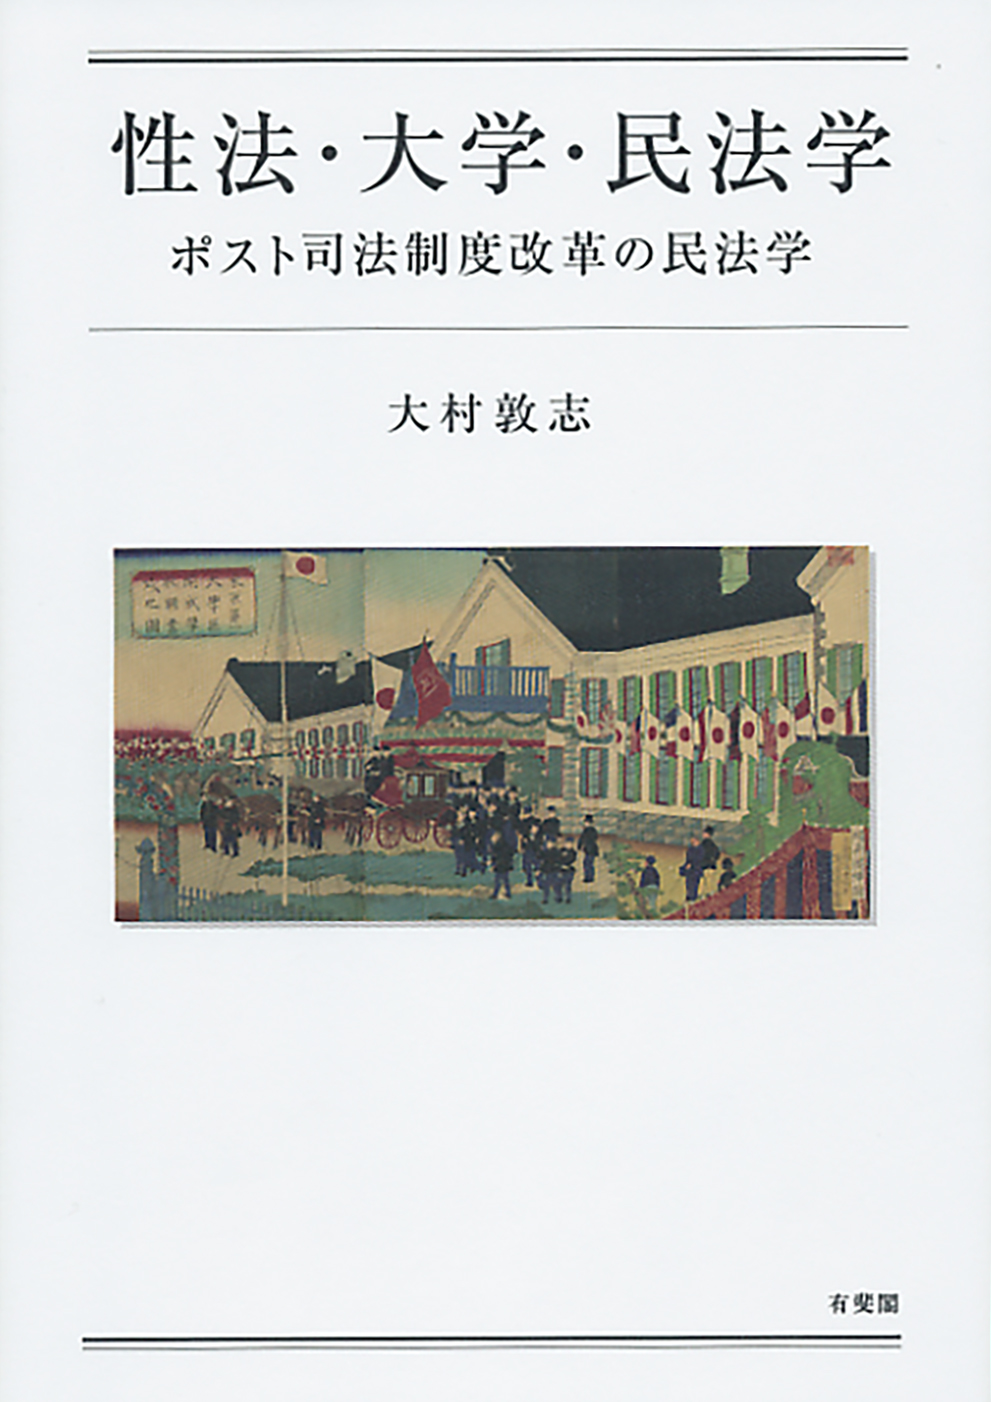 Nishiki-e of Utagawa Kuniteru on the cover